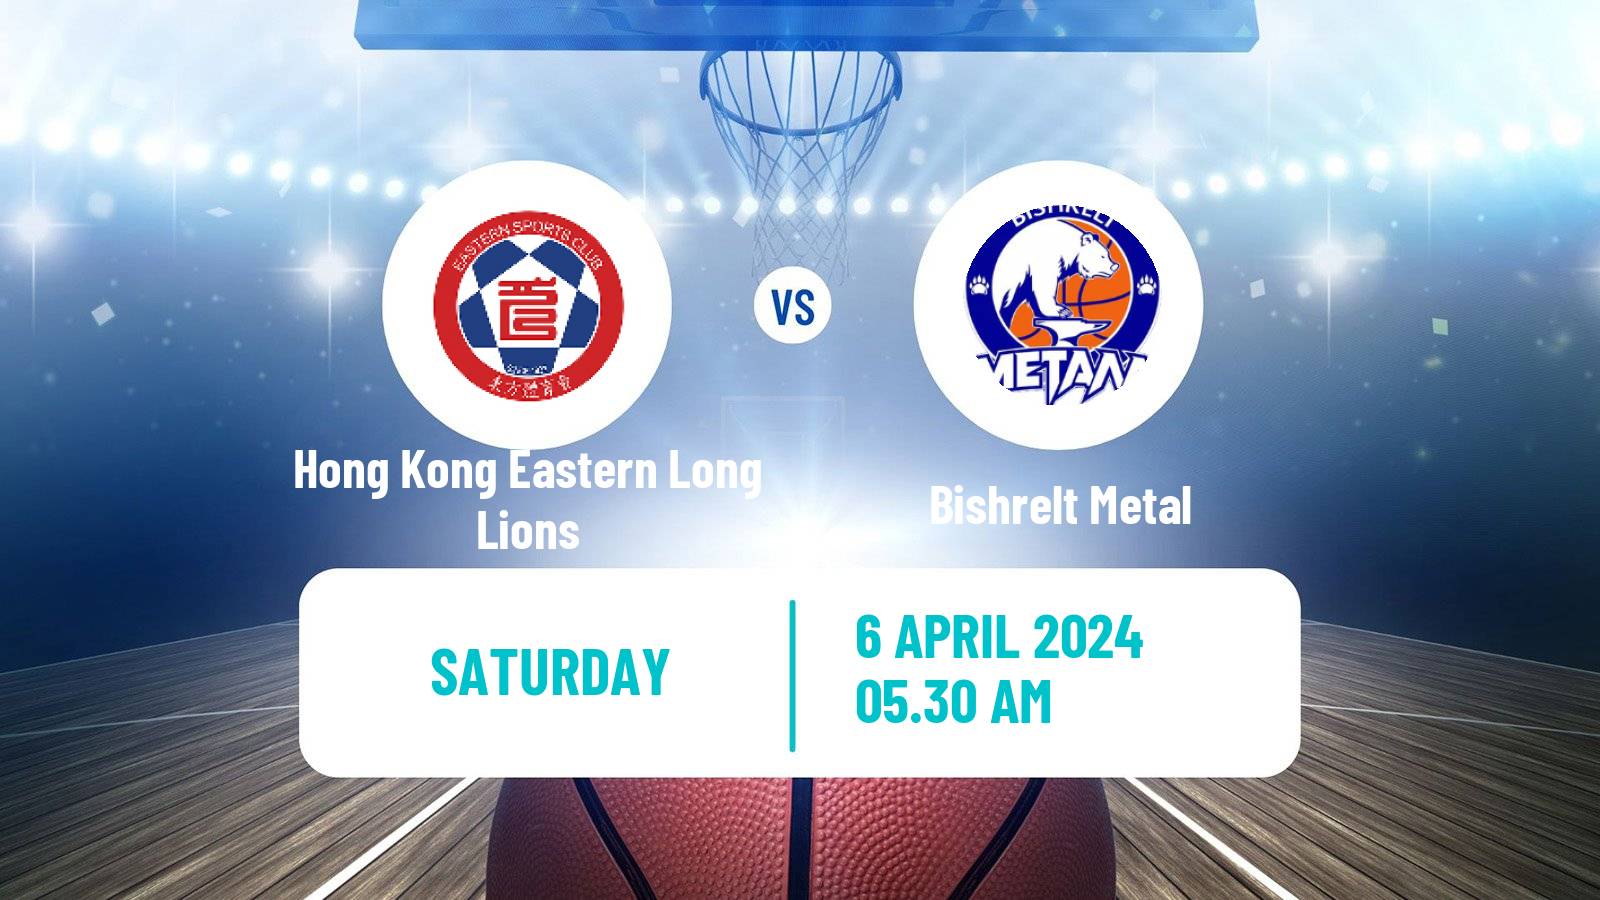 Basketball Asia Champions League Basketball Hong Kong Eastern Long Lions - Bishrelt Metal